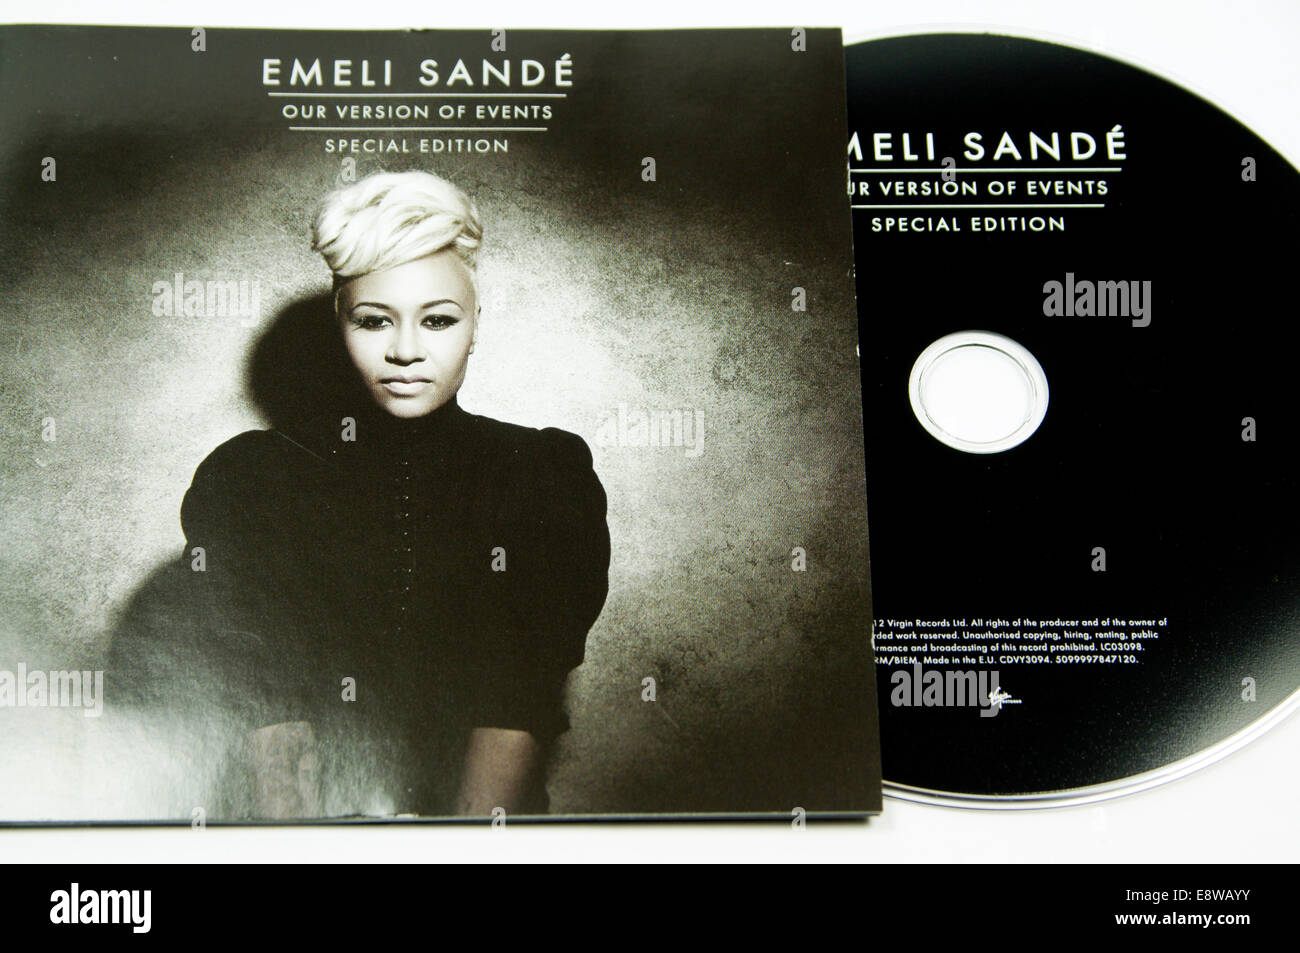 Emili Sande, Our Version of Events Album,compact disc. Stock Photo